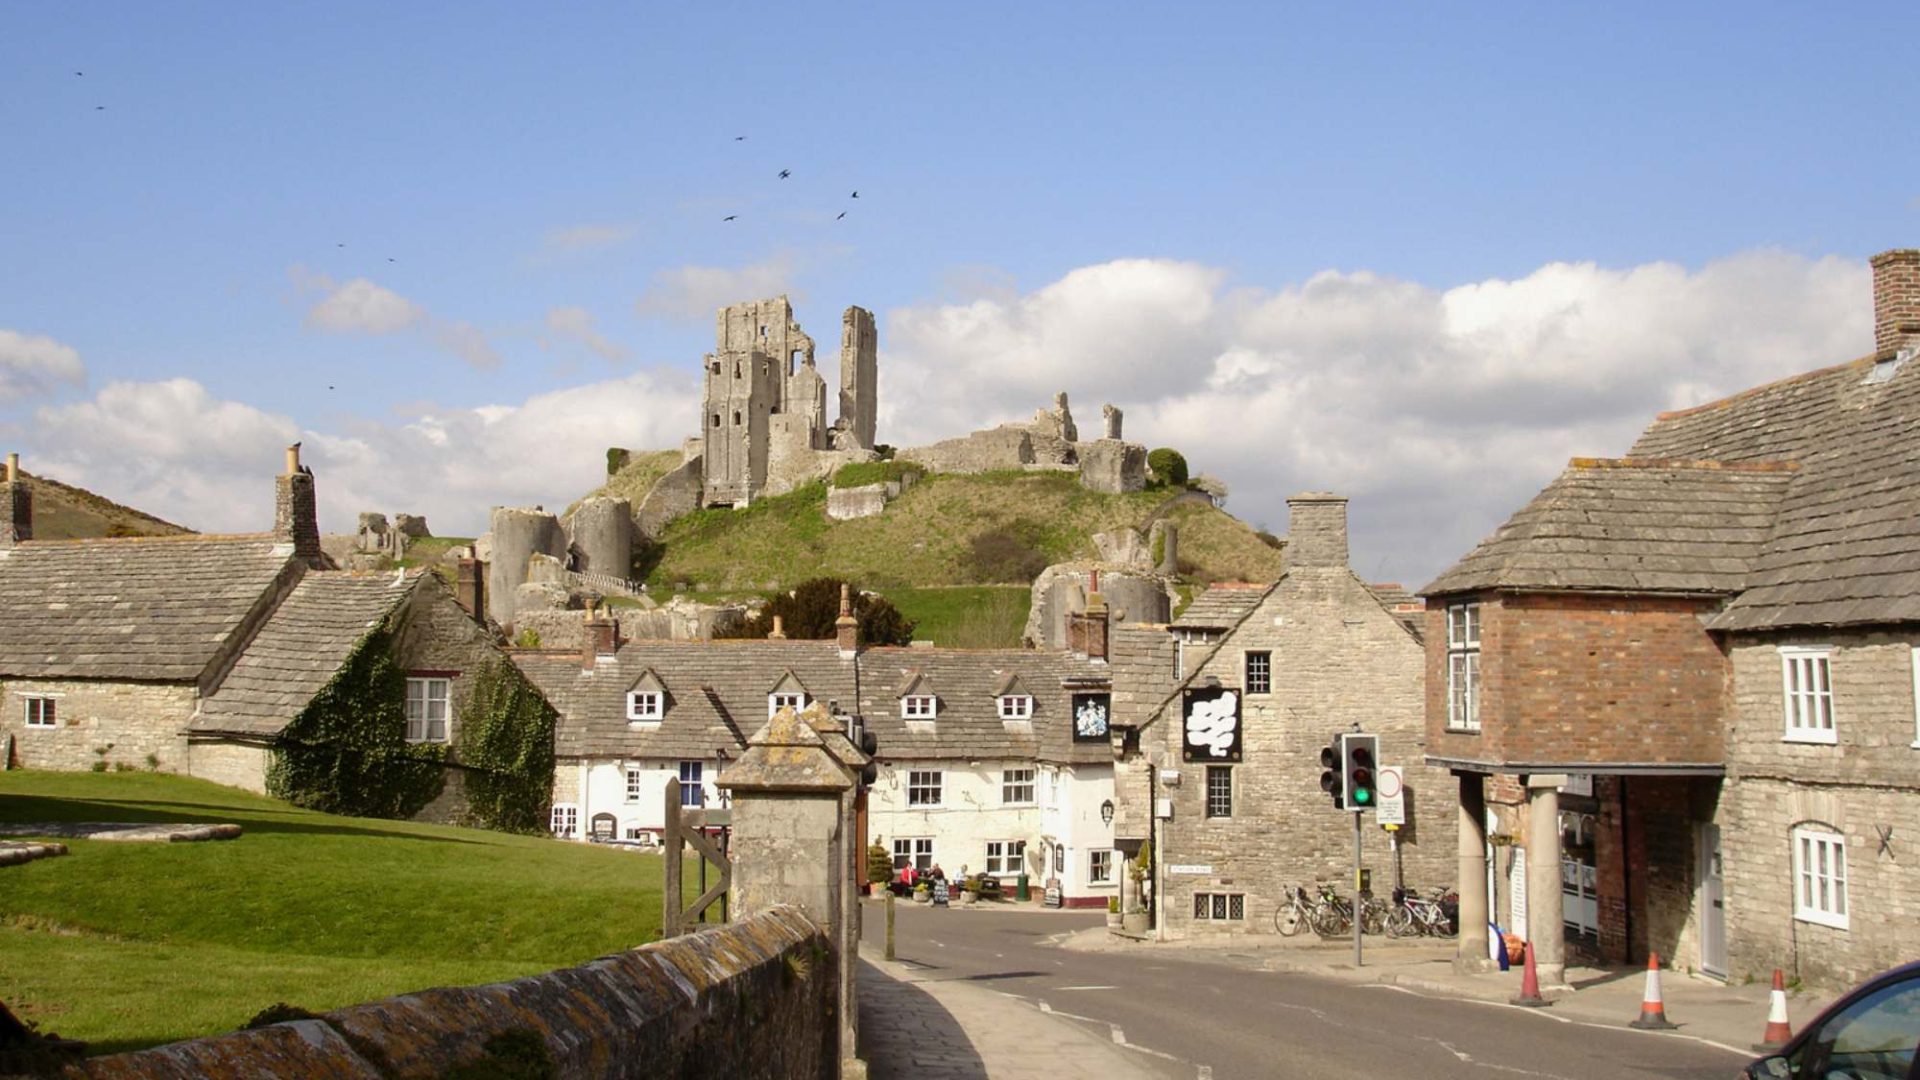 The village of Corfe Castle